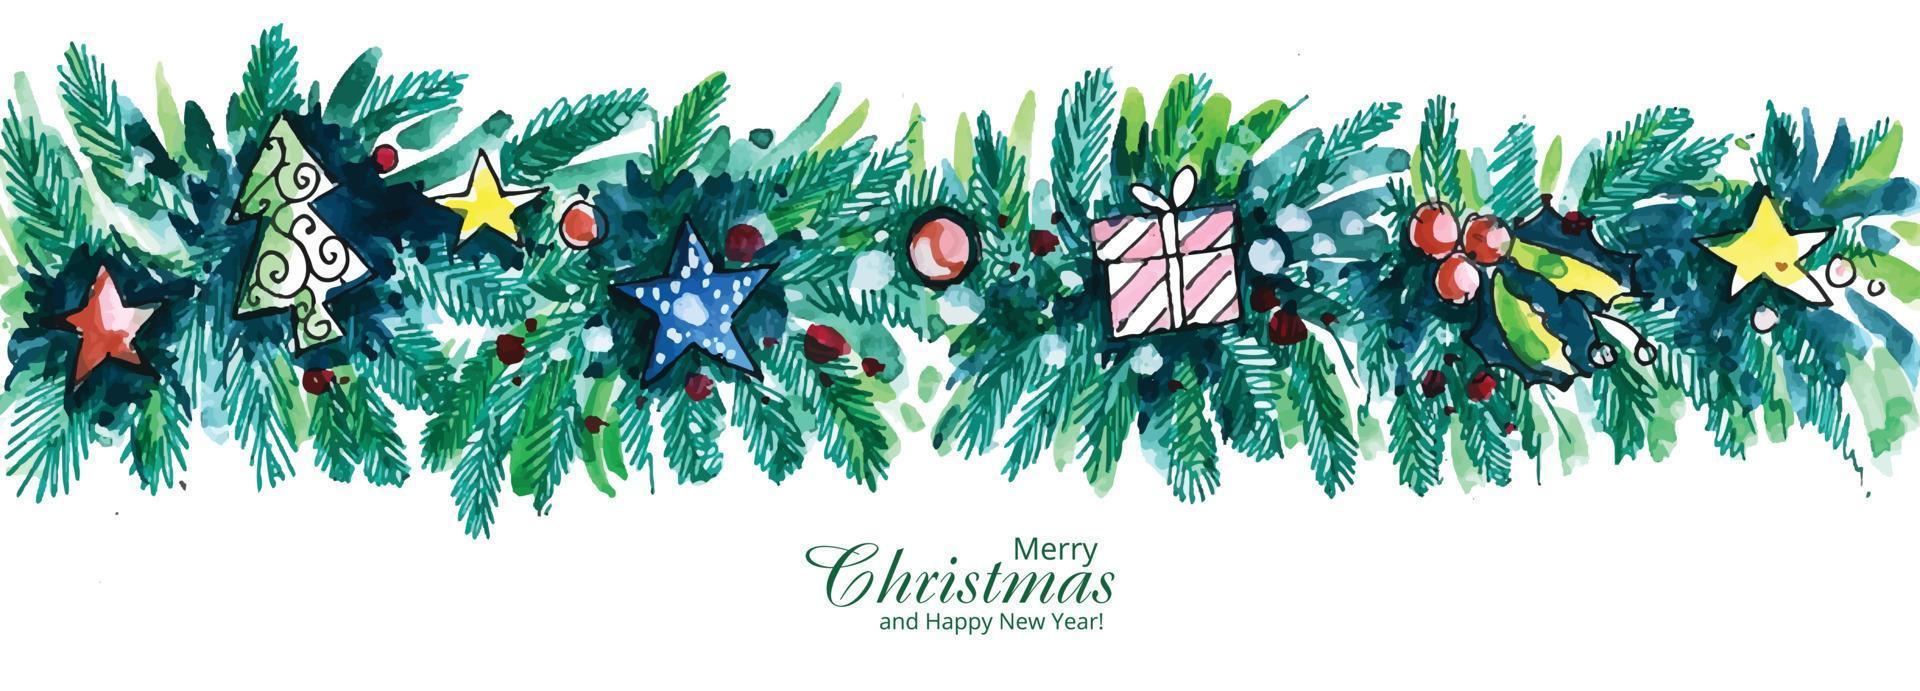 diseño de tarjeta de banner de guirnalda de navidad decorativa vector